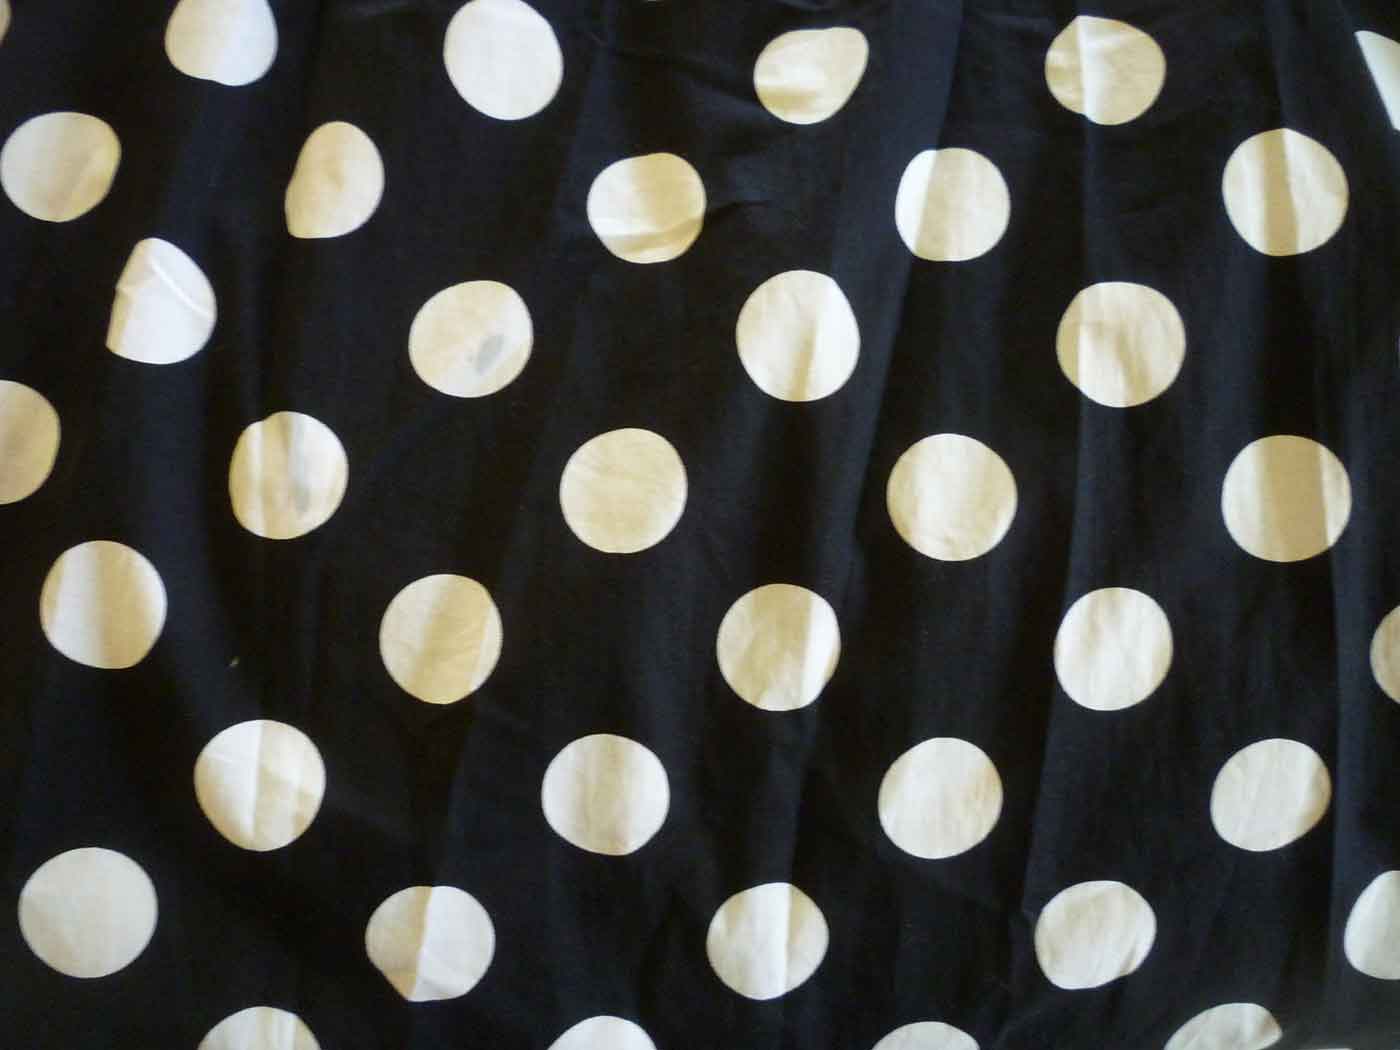 White polka dots on black cotton fabric